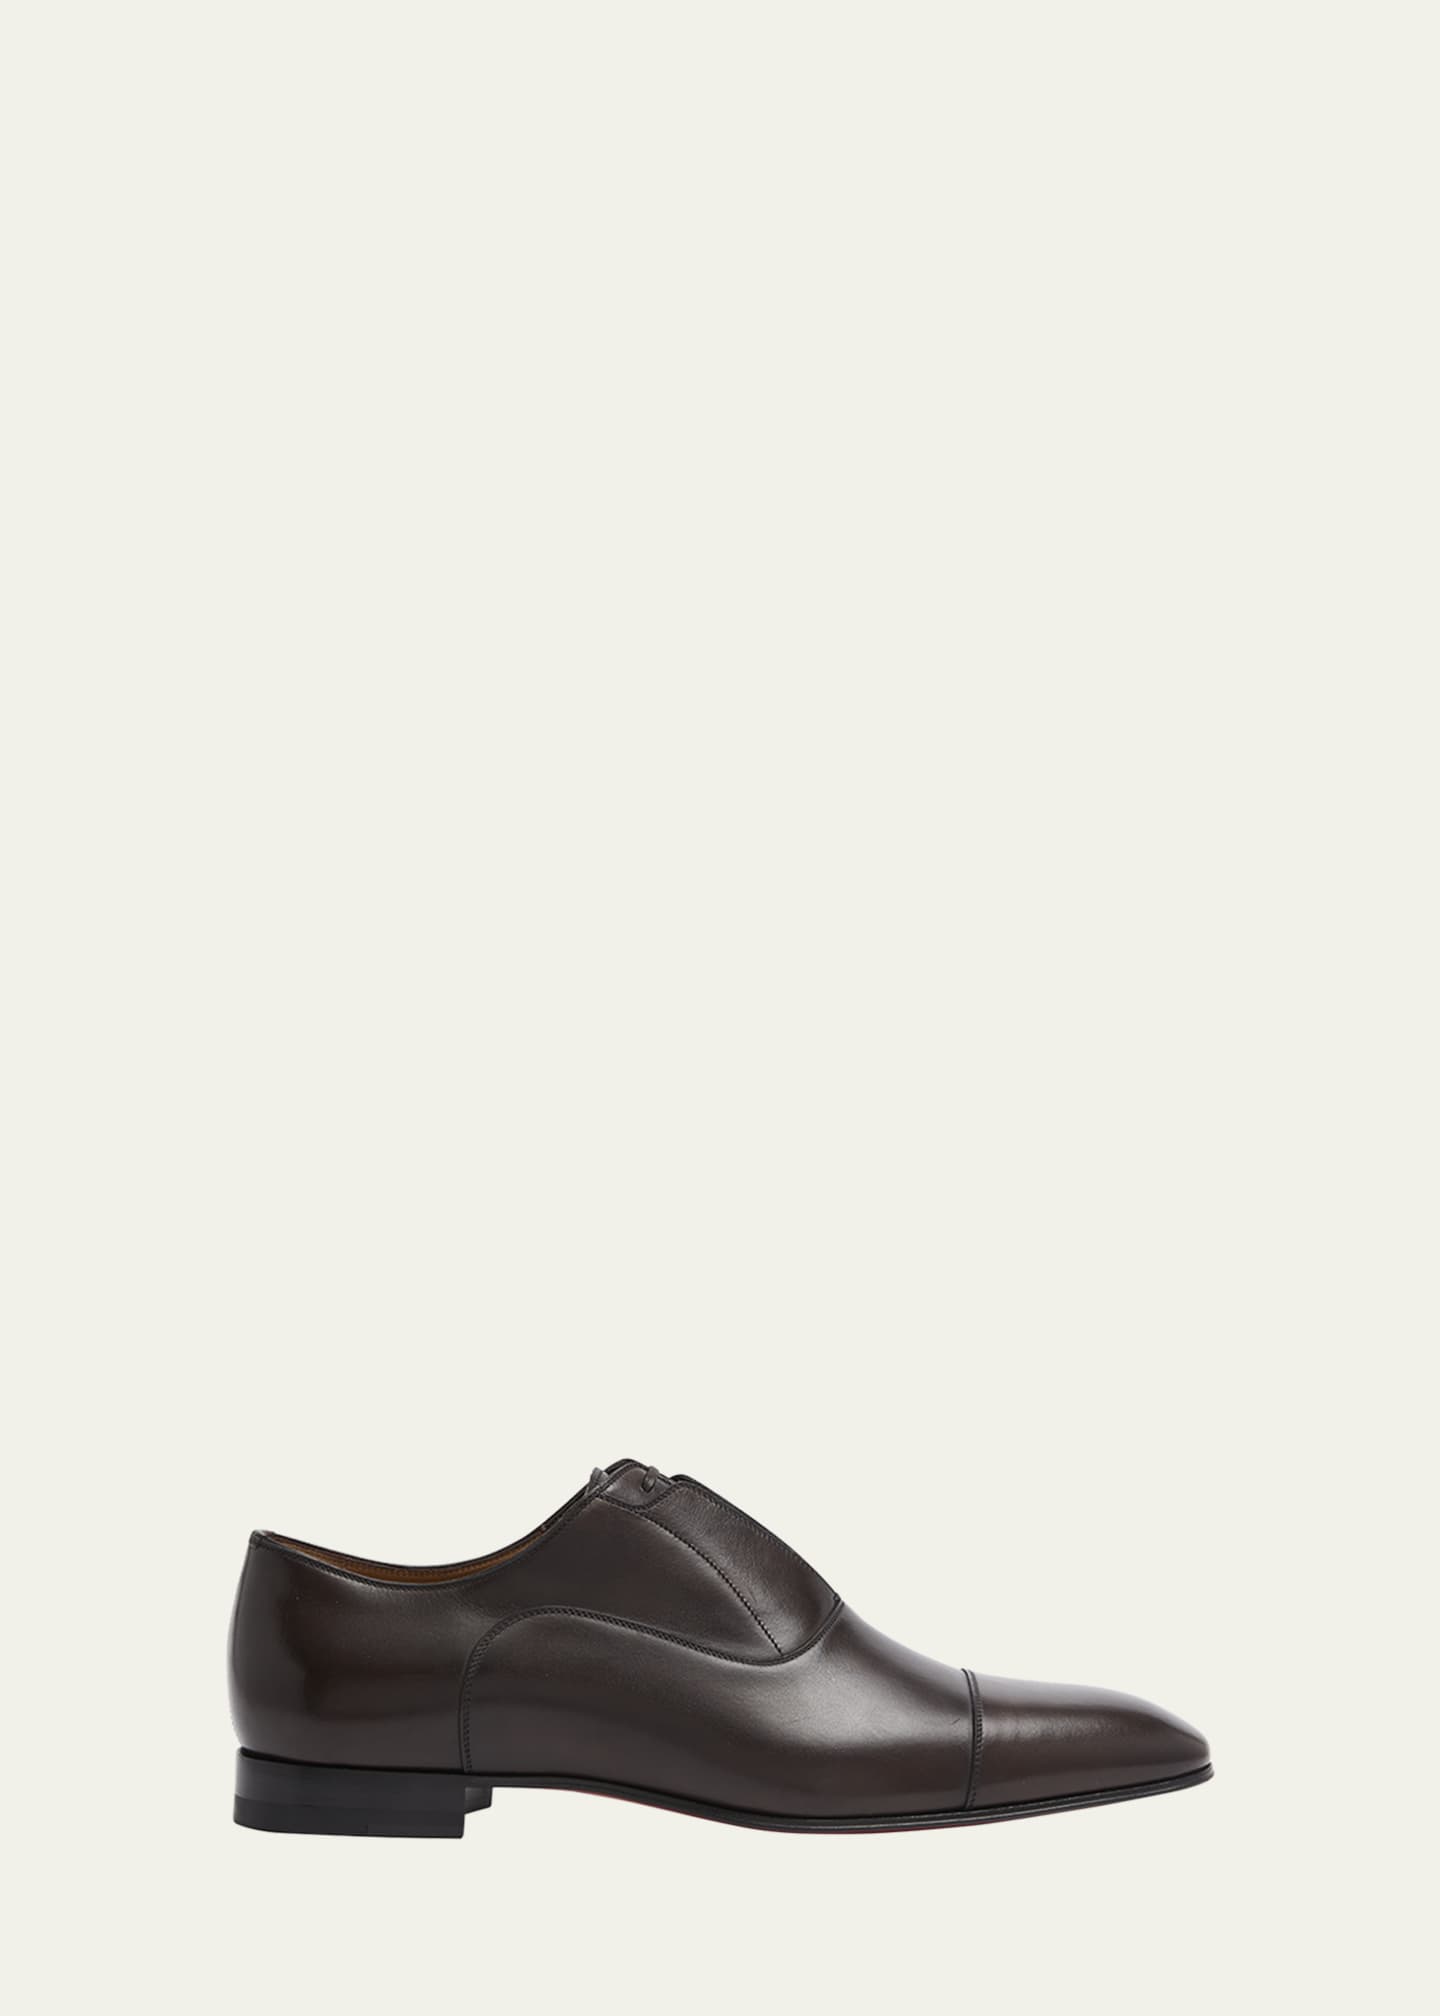 Christian Louboutin Men's Greghost Leather Oxfords - Bergdorf Goodman